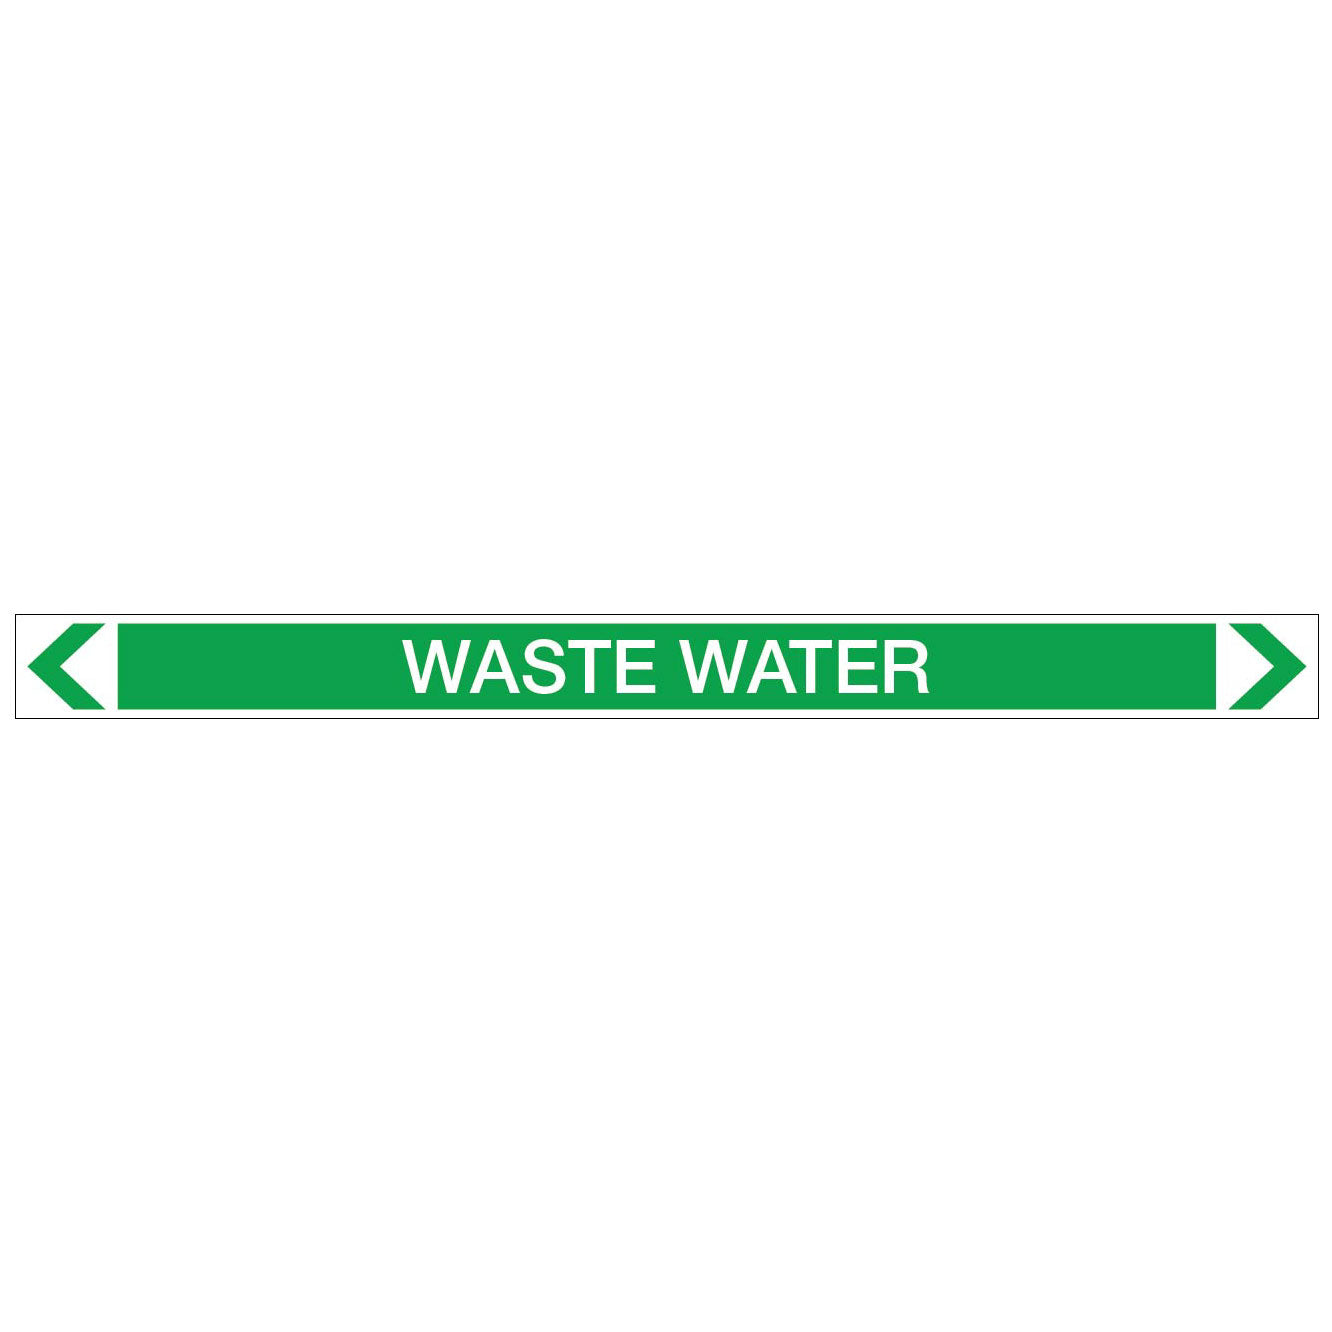 Water - Waste Water - Pipe Marker Sticker